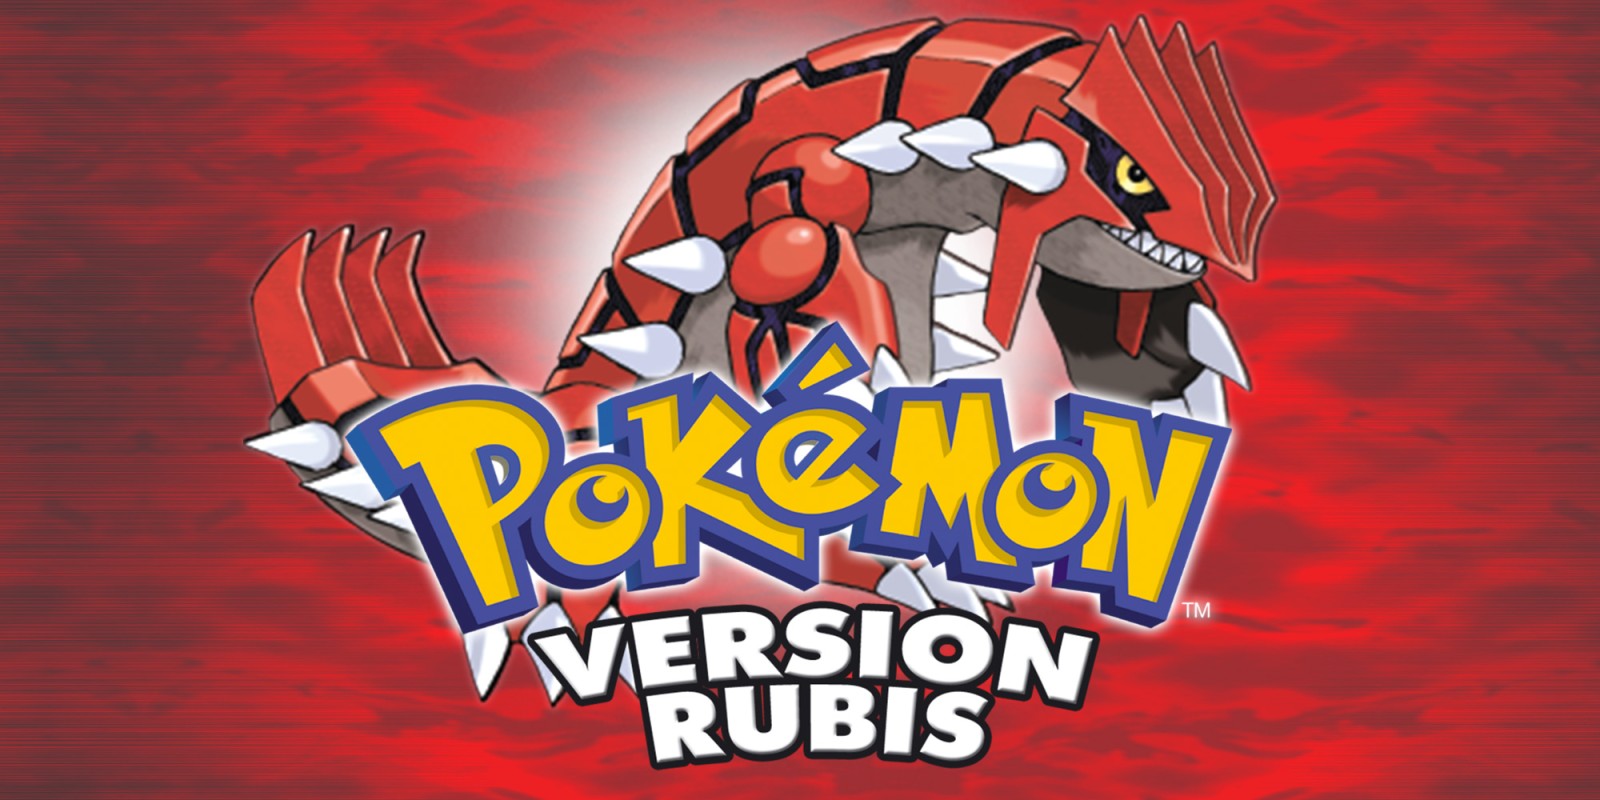 Pokémon Version rubis